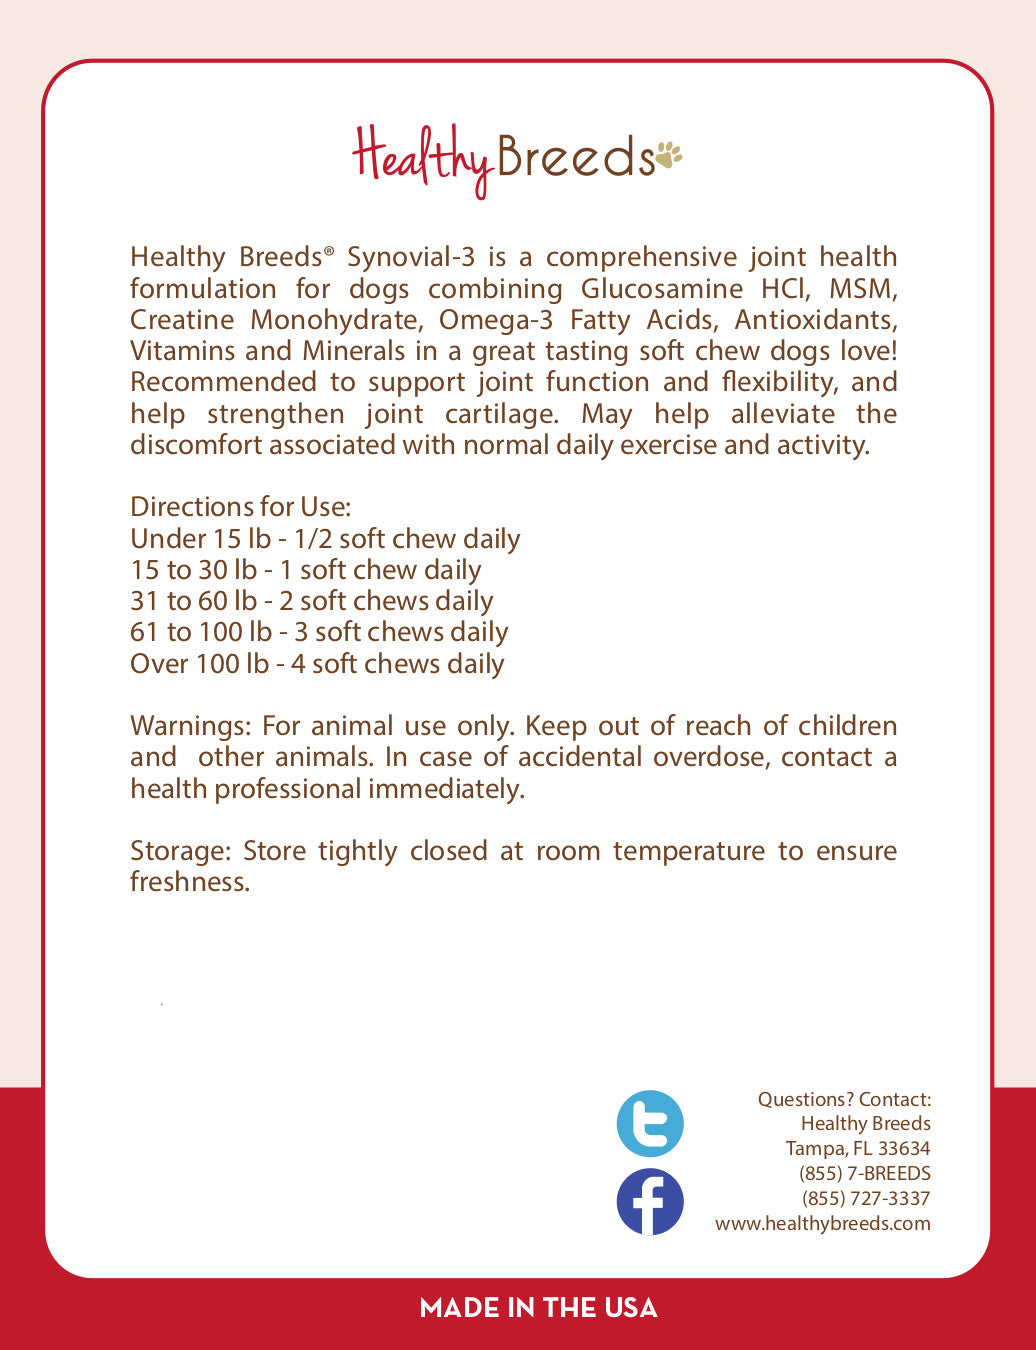 Bullmastiff Synovial-3 Joint Health Formulation Soft Chews 240 Count